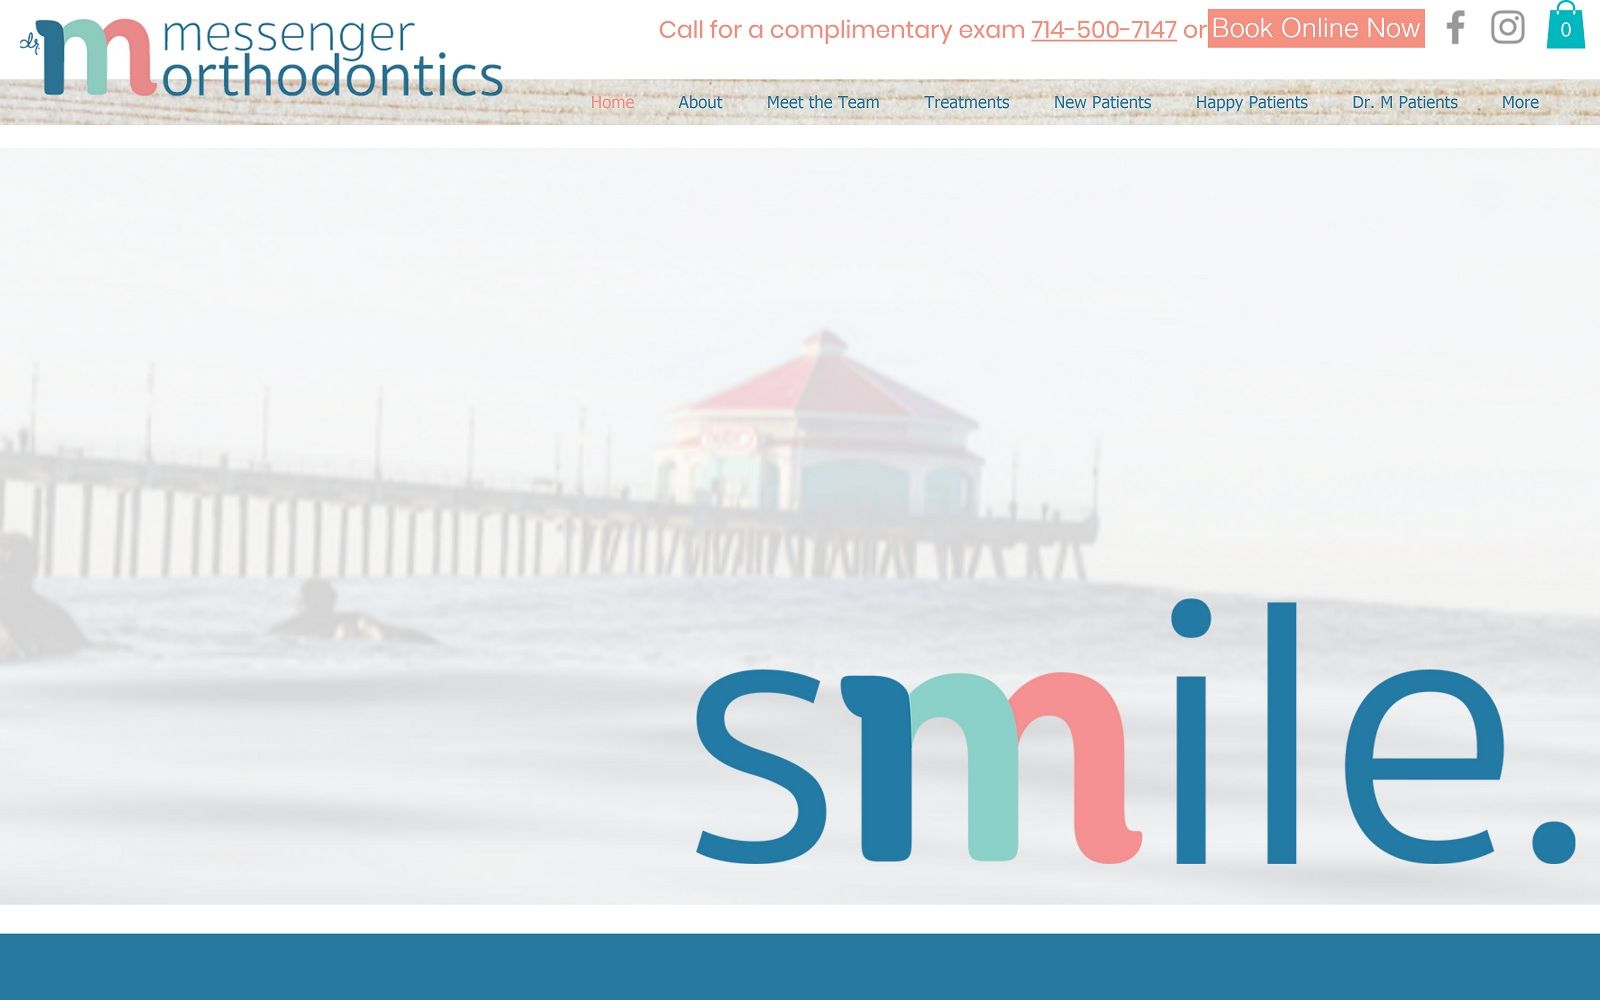 The screenshot of messenger orthodontics messenger-smiles. Com website